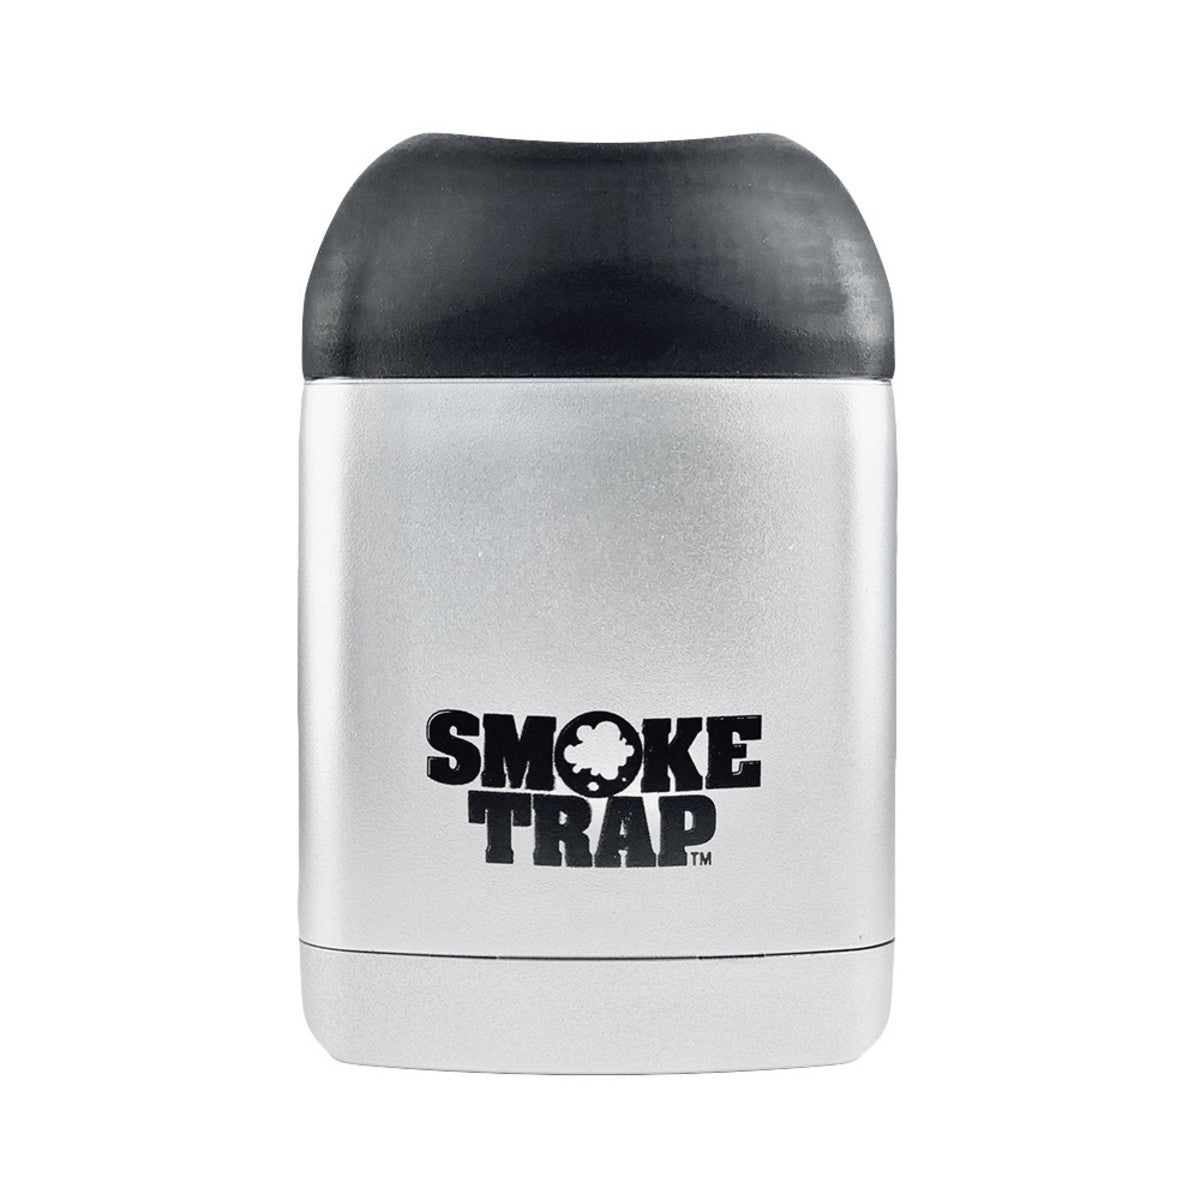 Smoke Trap 2.0 Personal Air Filter